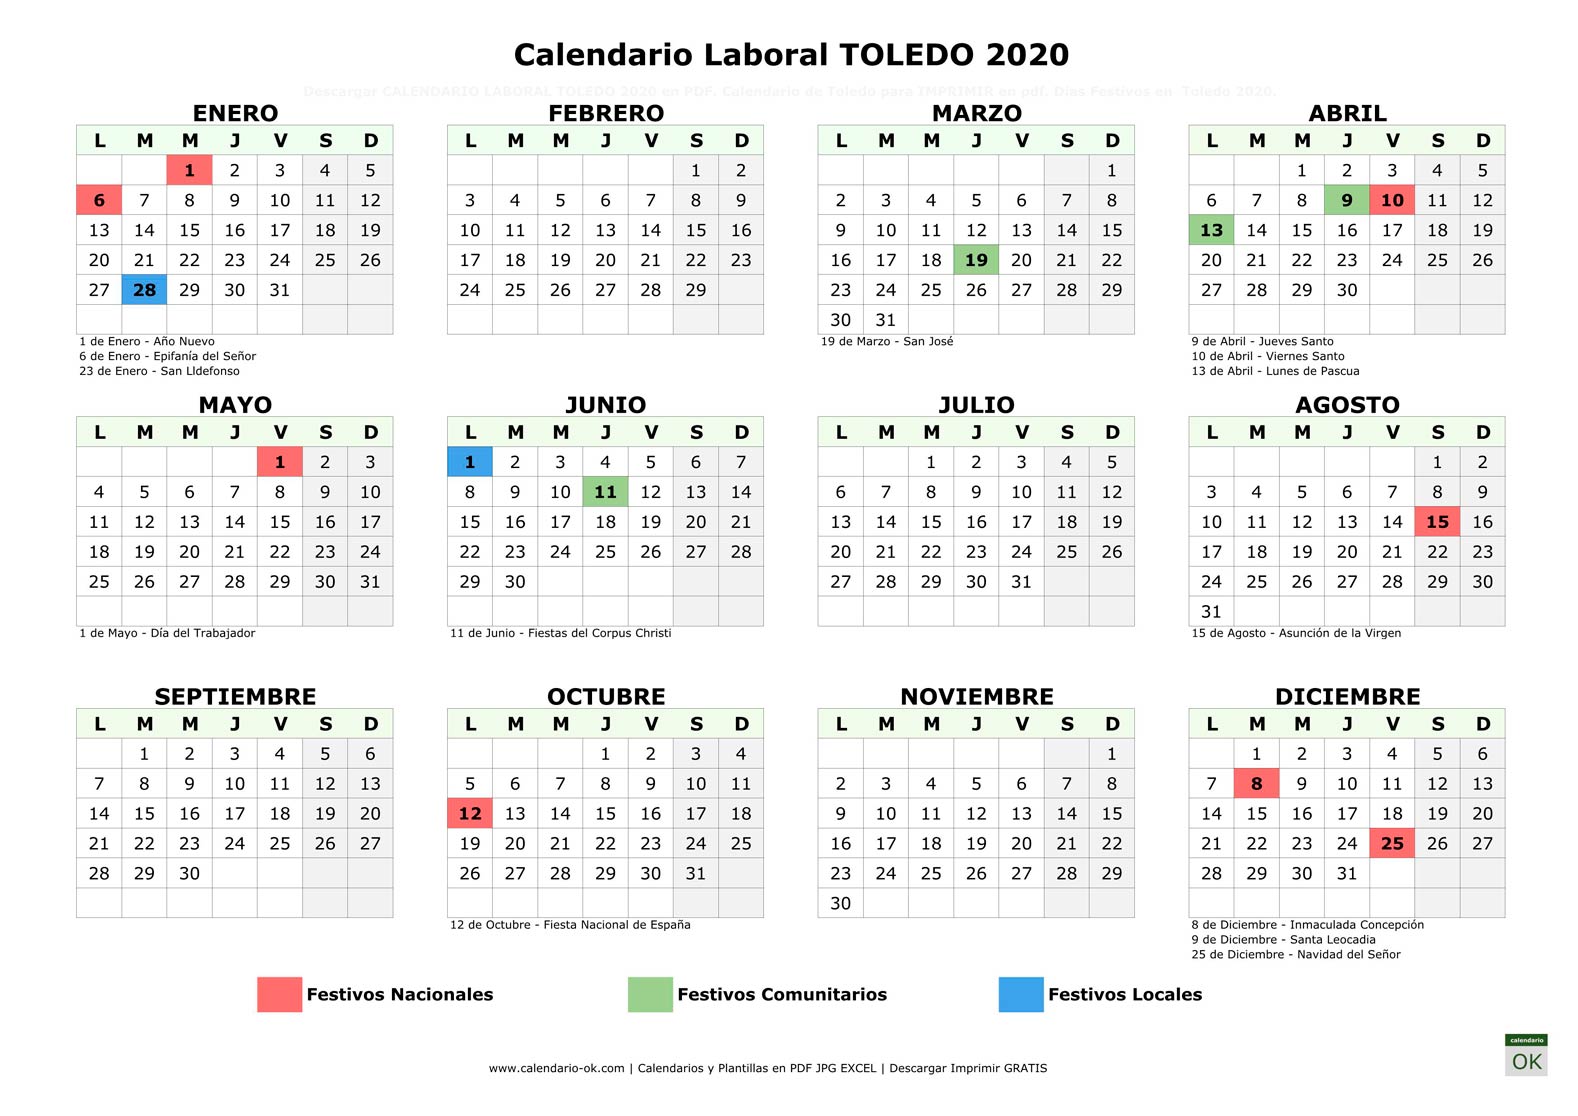 Calendario Laboral TOLEDO 2020 horizontal